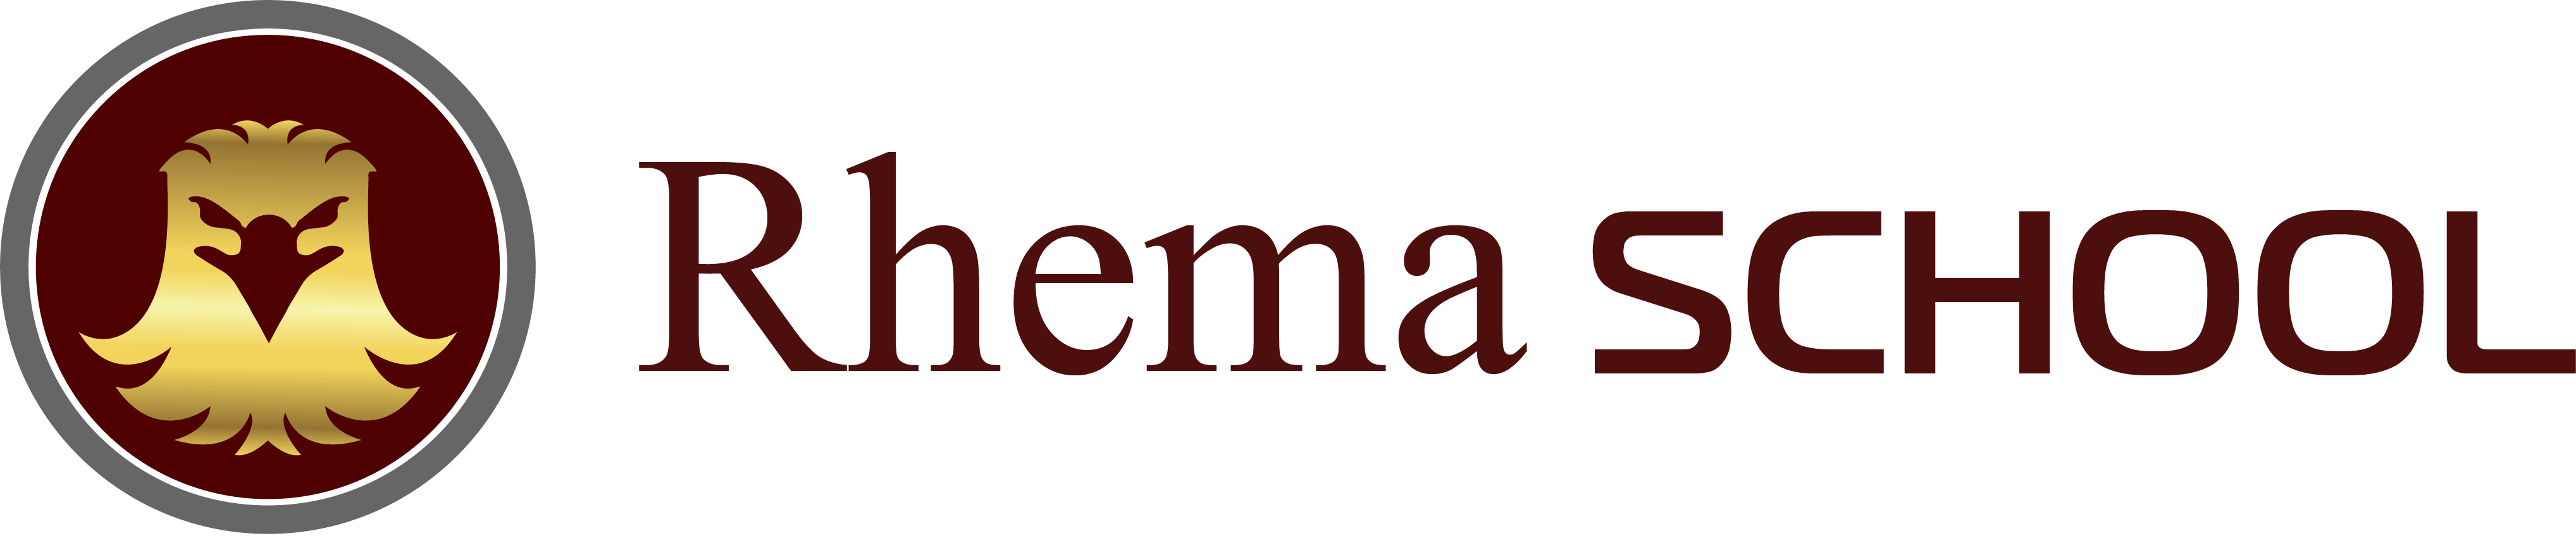 logos word vs rhema word